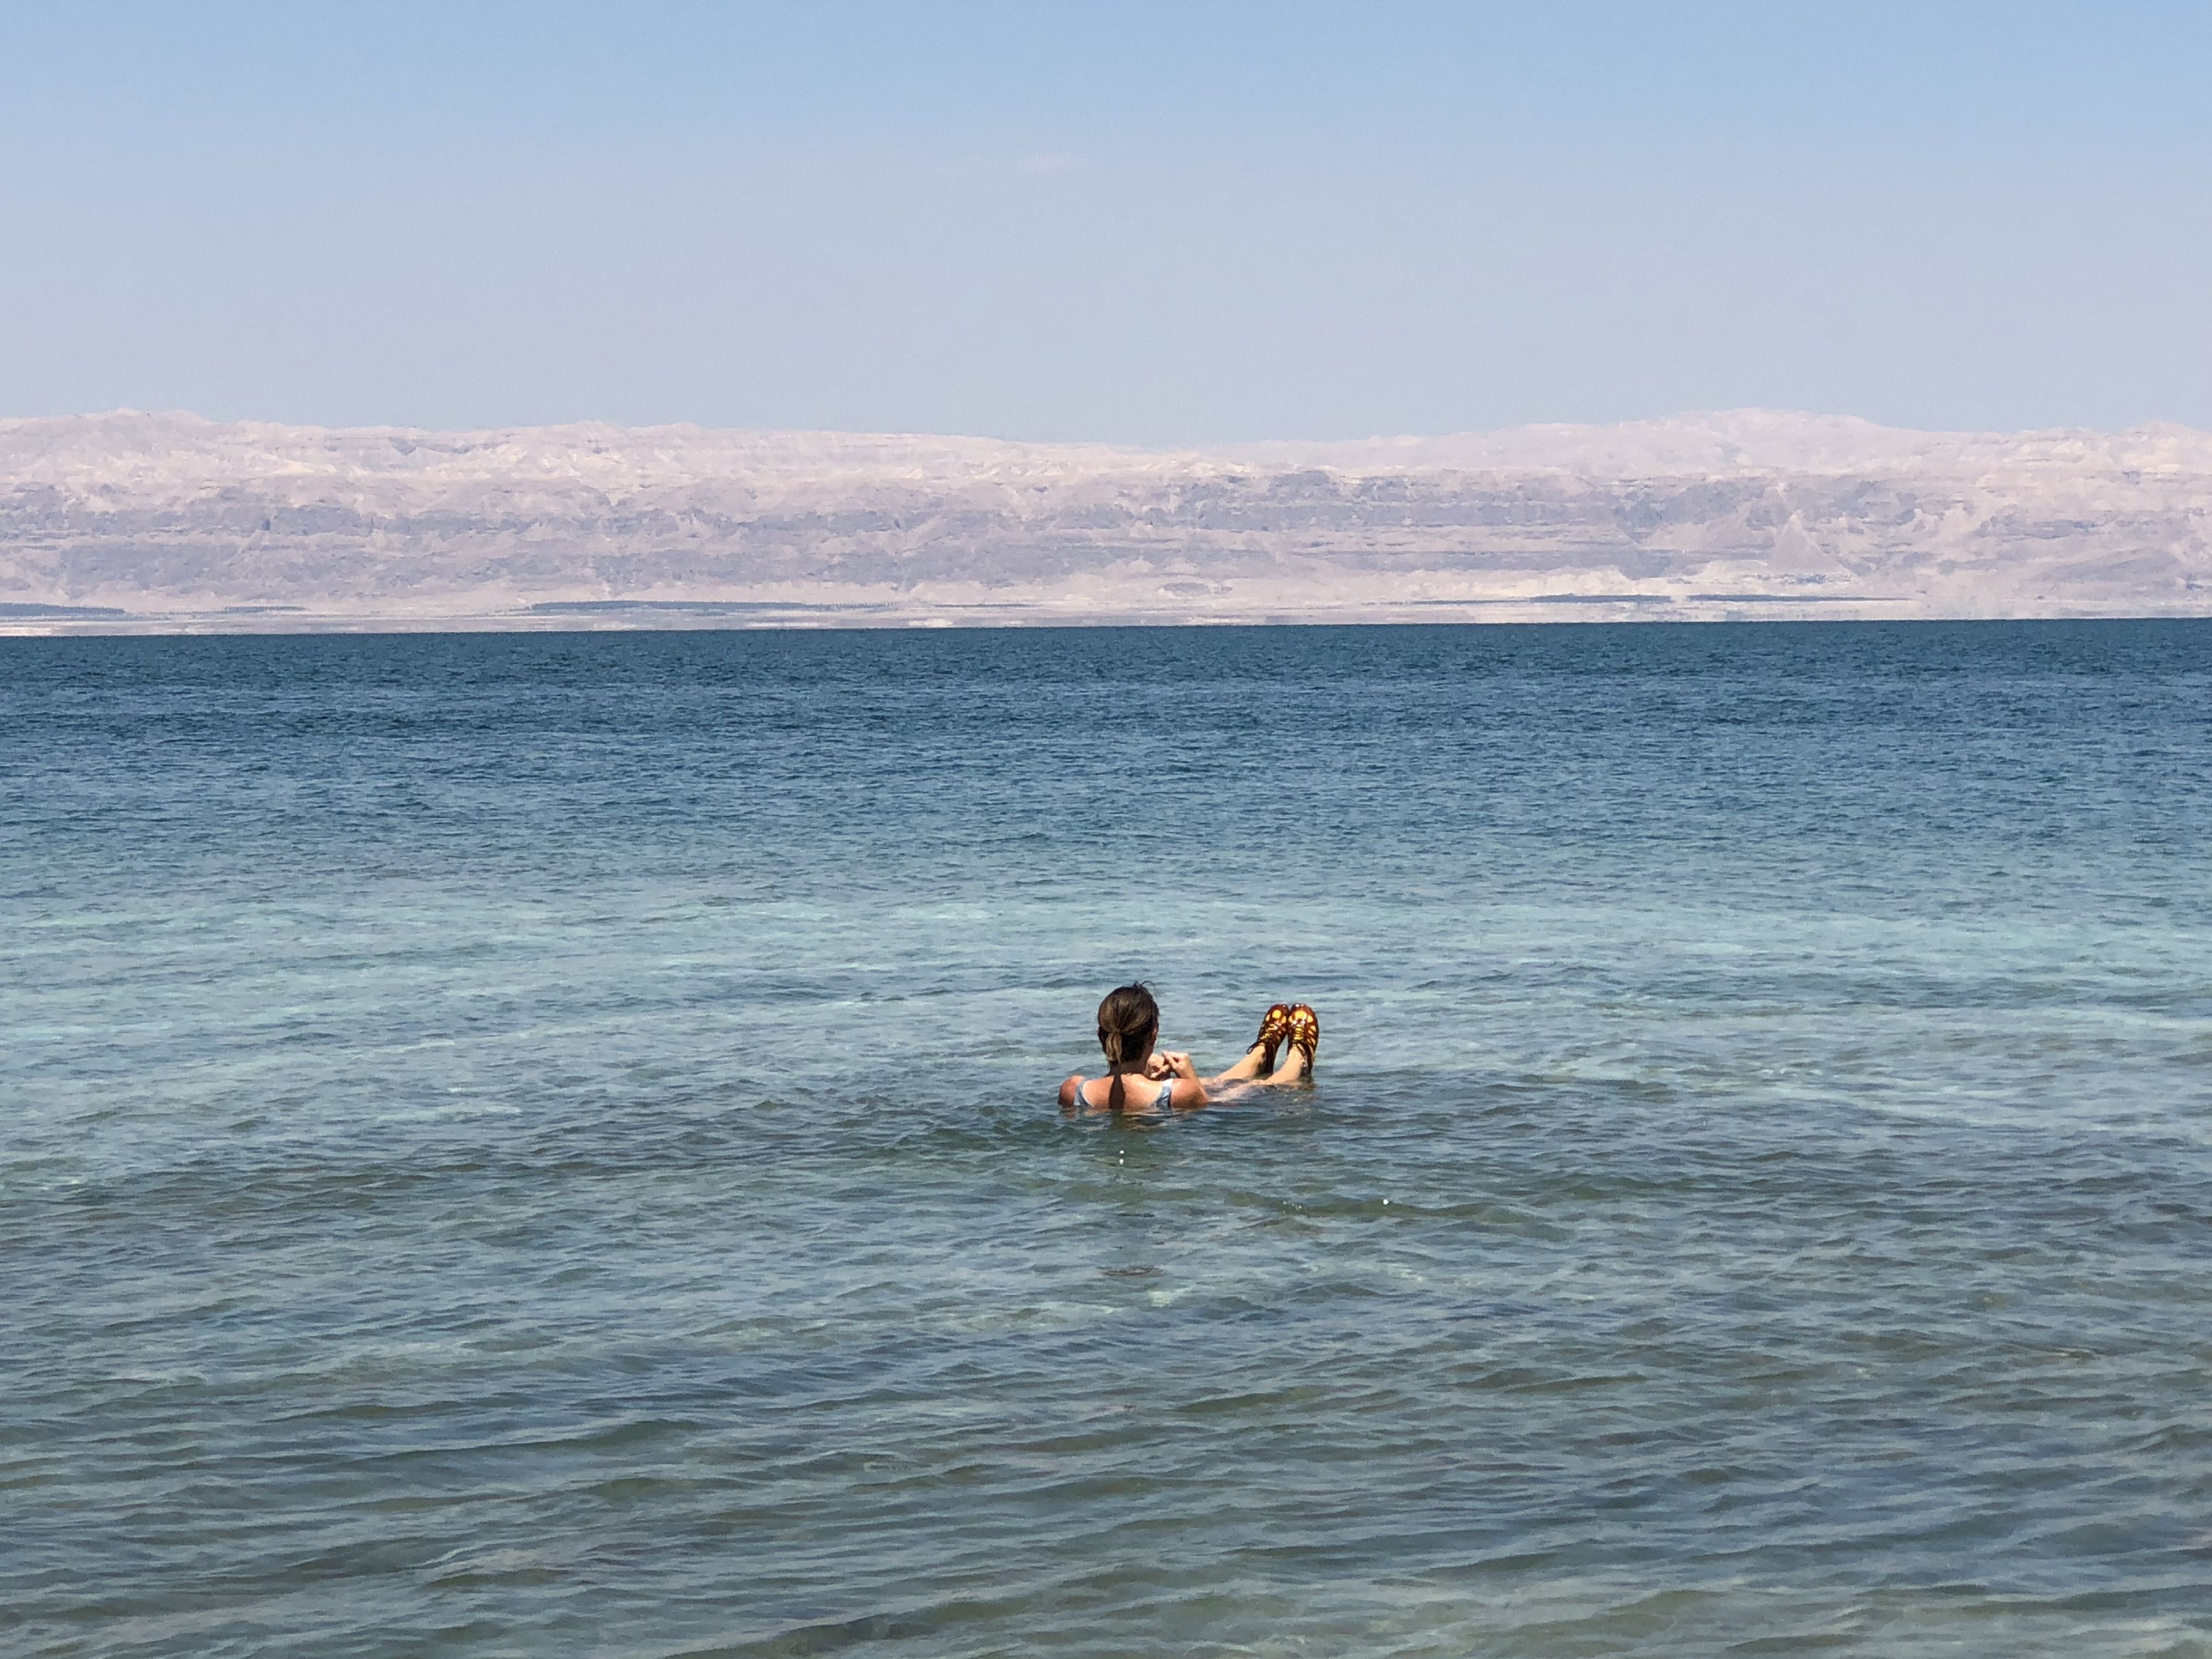 Dead Sea, Jordan